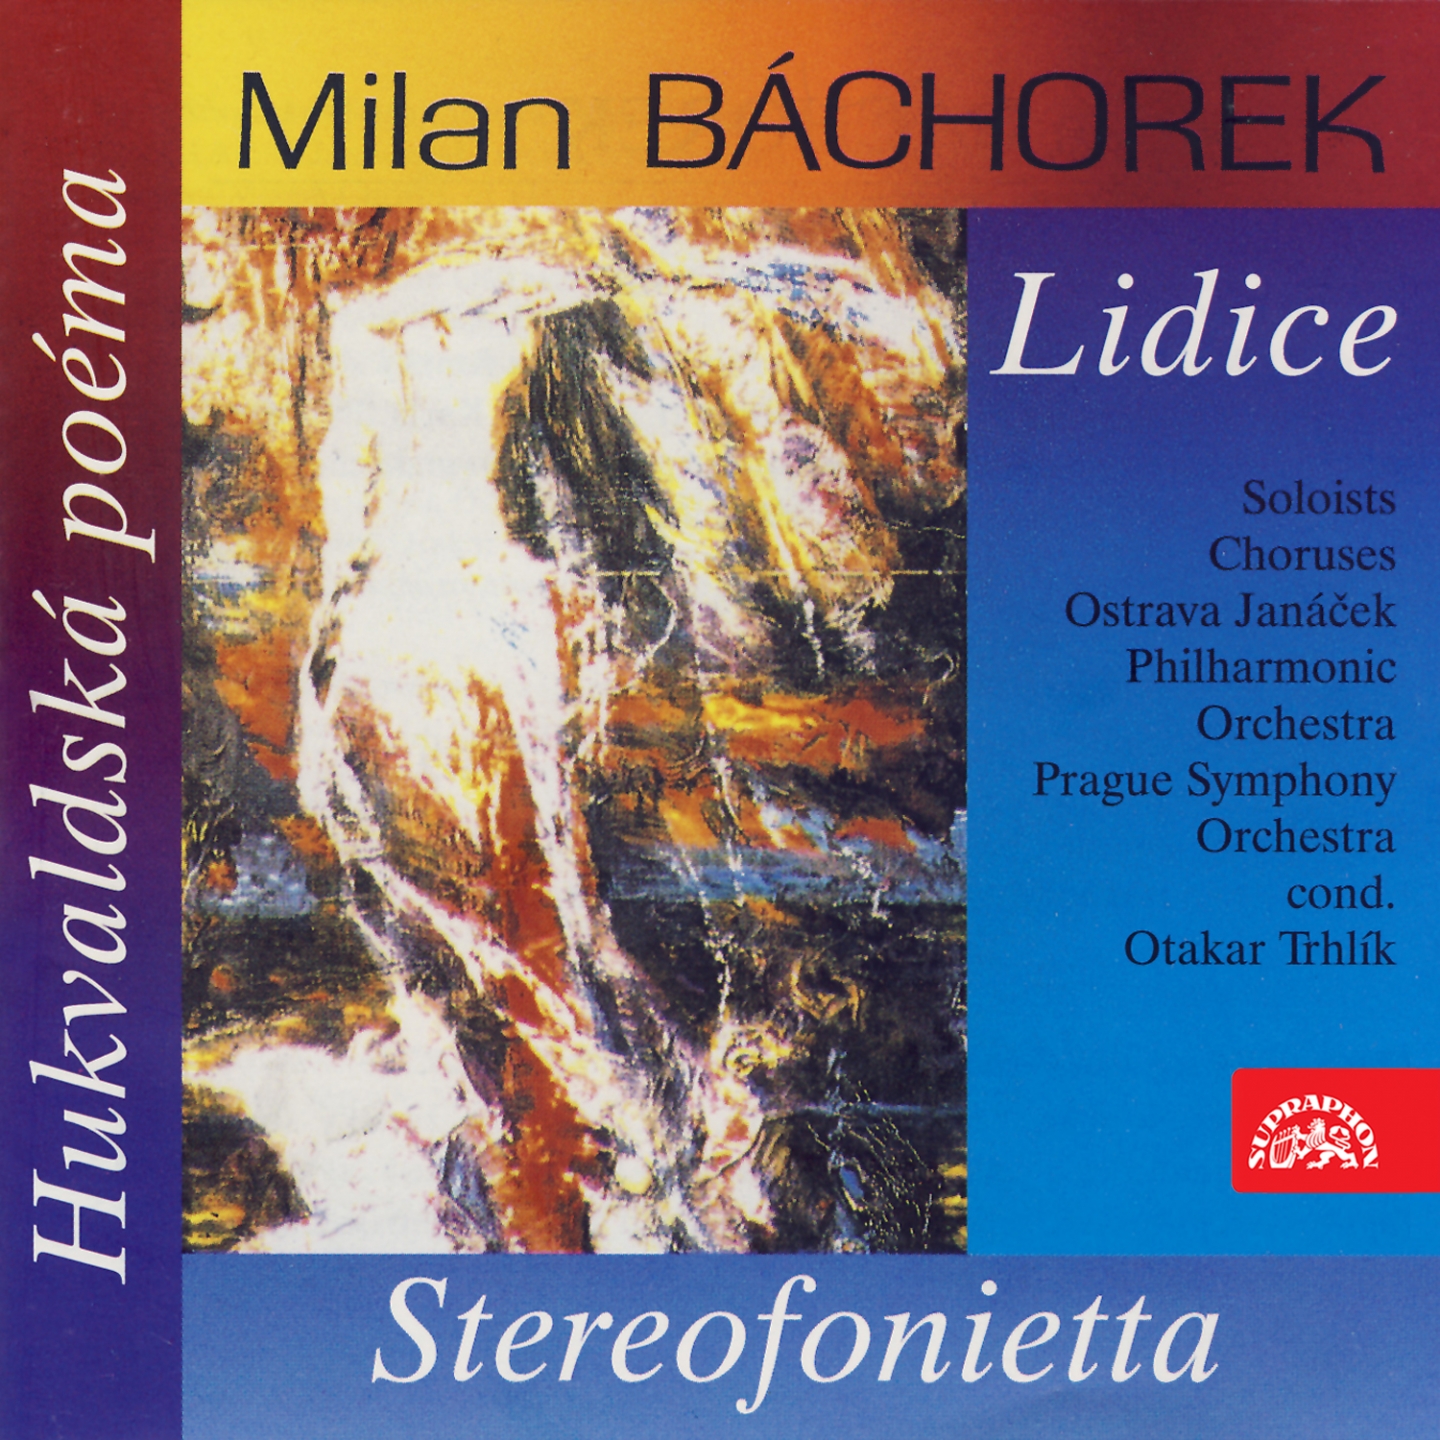 Ba chorek: Lidice, Stereofonietta, Hukvald Poem